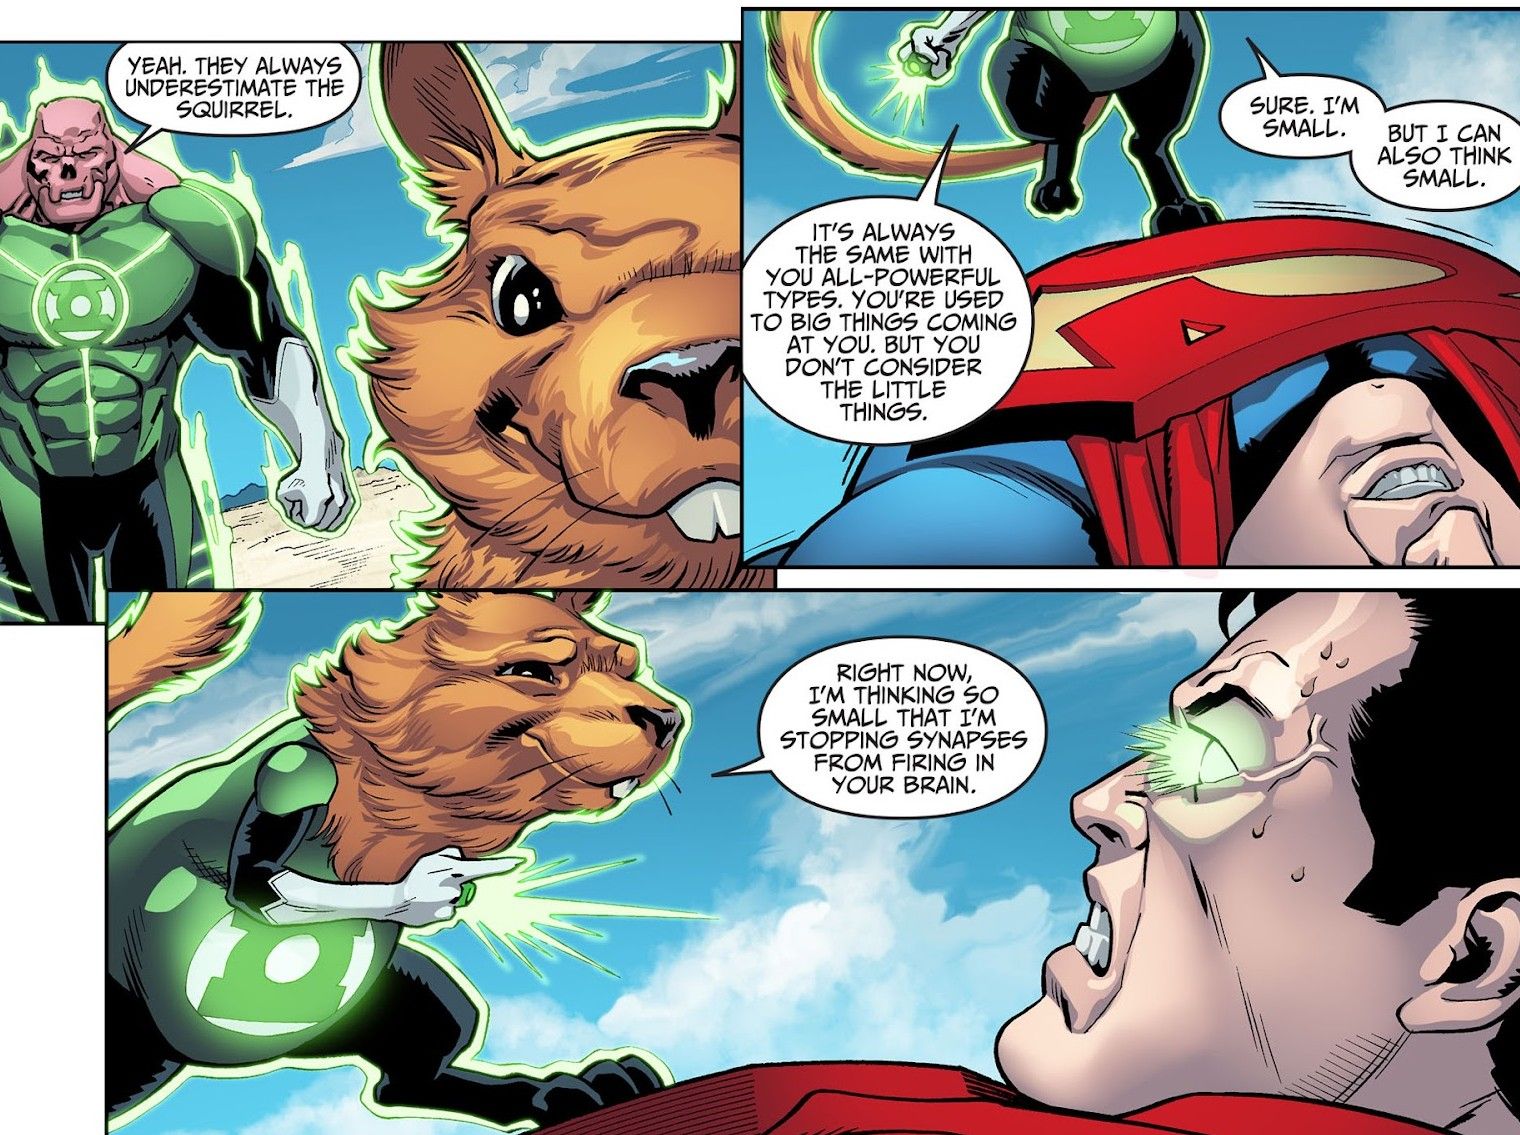 Green lantern squirrel vs superman